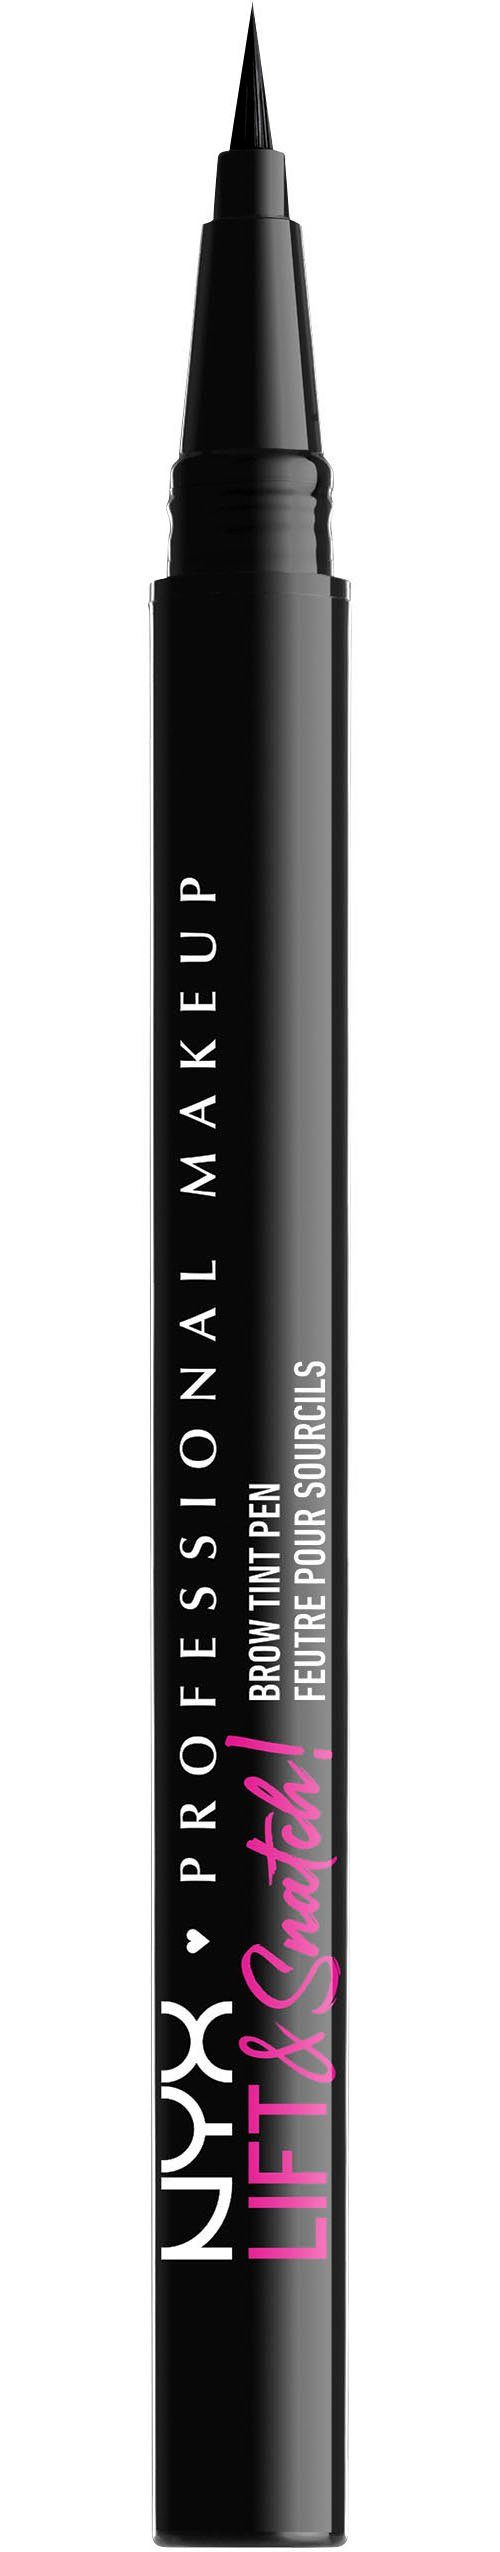 NYX Augenbrauen-Stift Professional Makeup Pen black Lift & Brow Tint Snatch